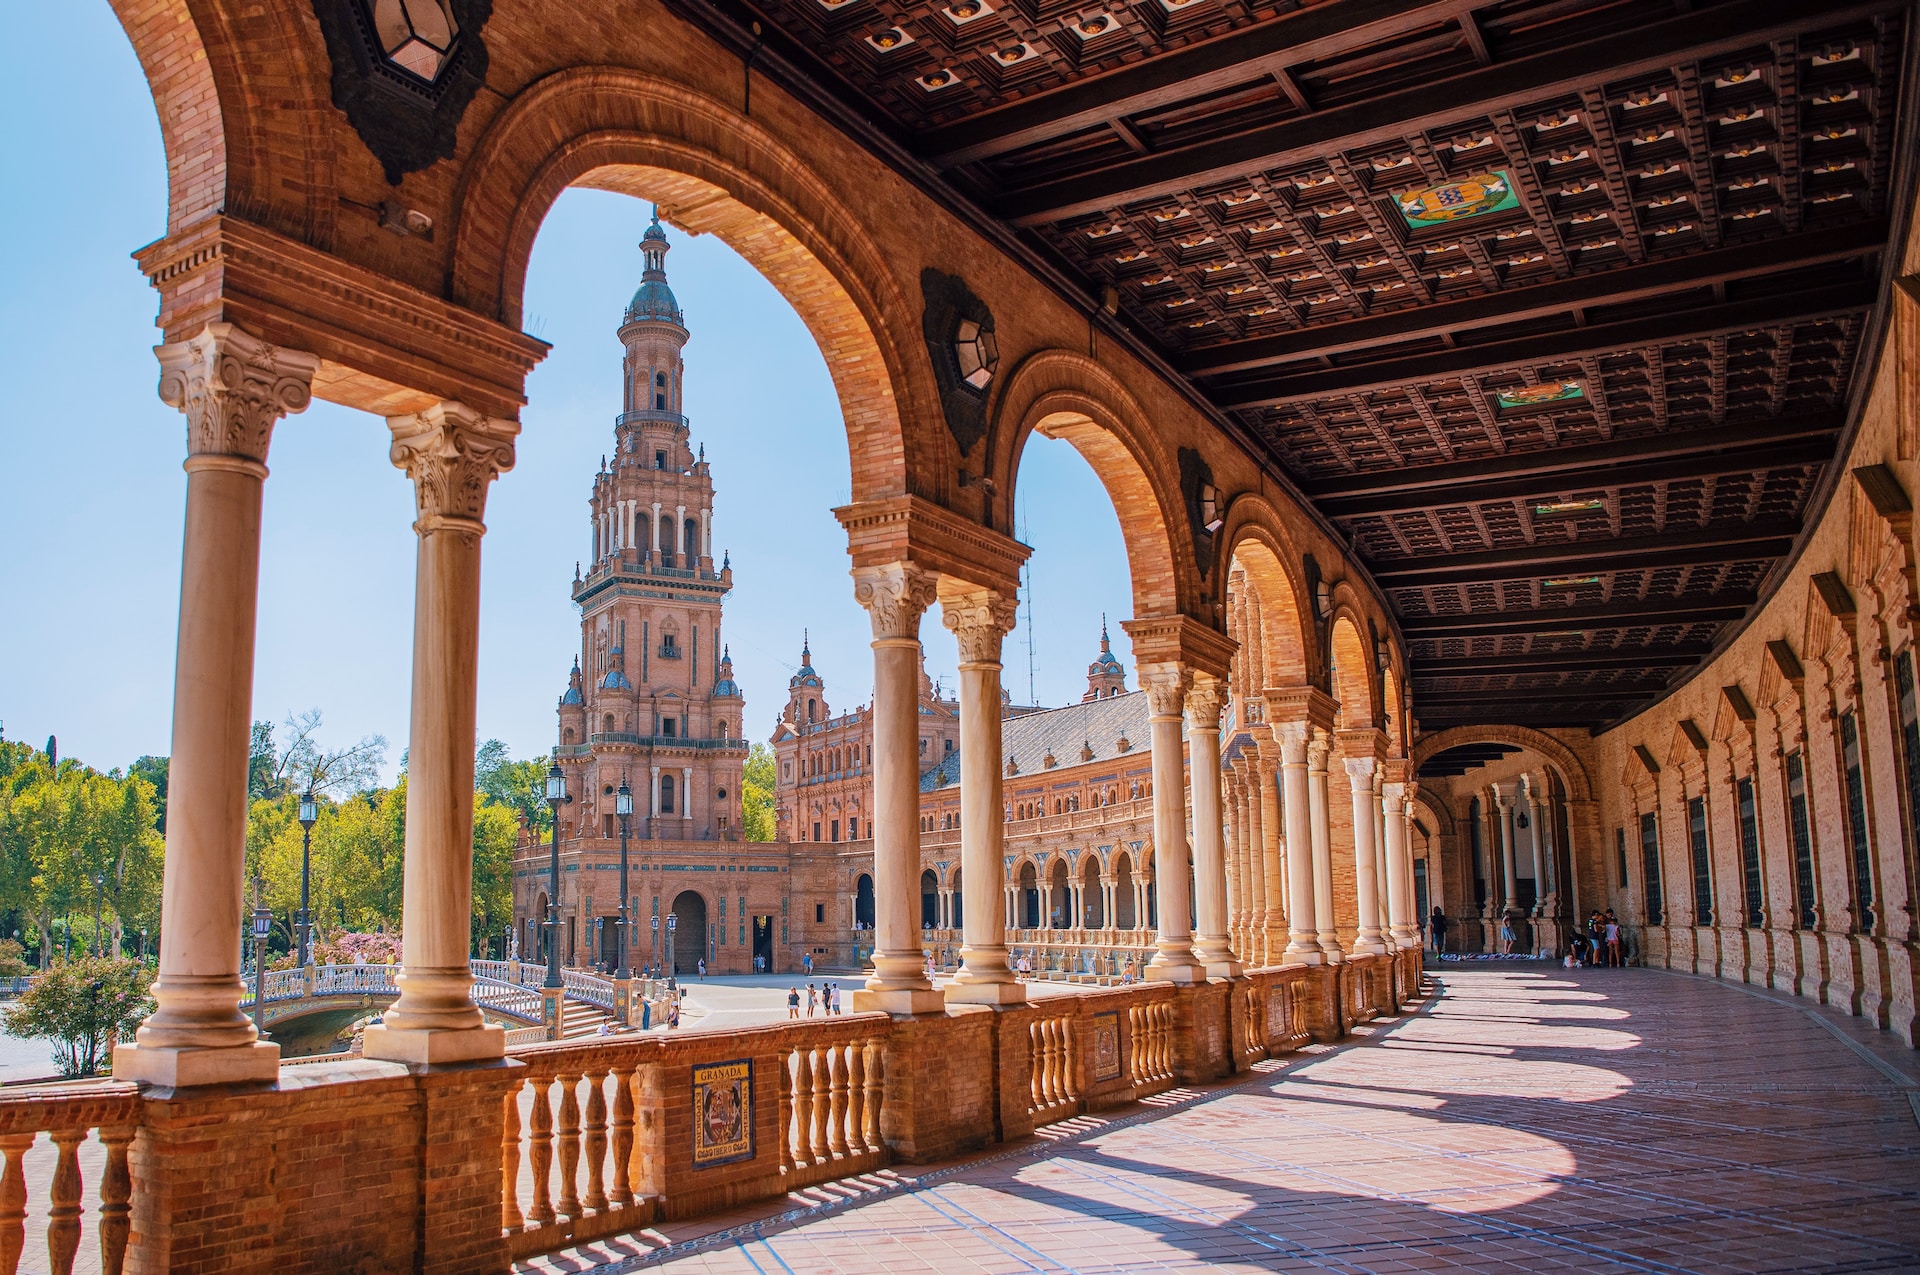 The ornate covered walkways of Plaza de España. 